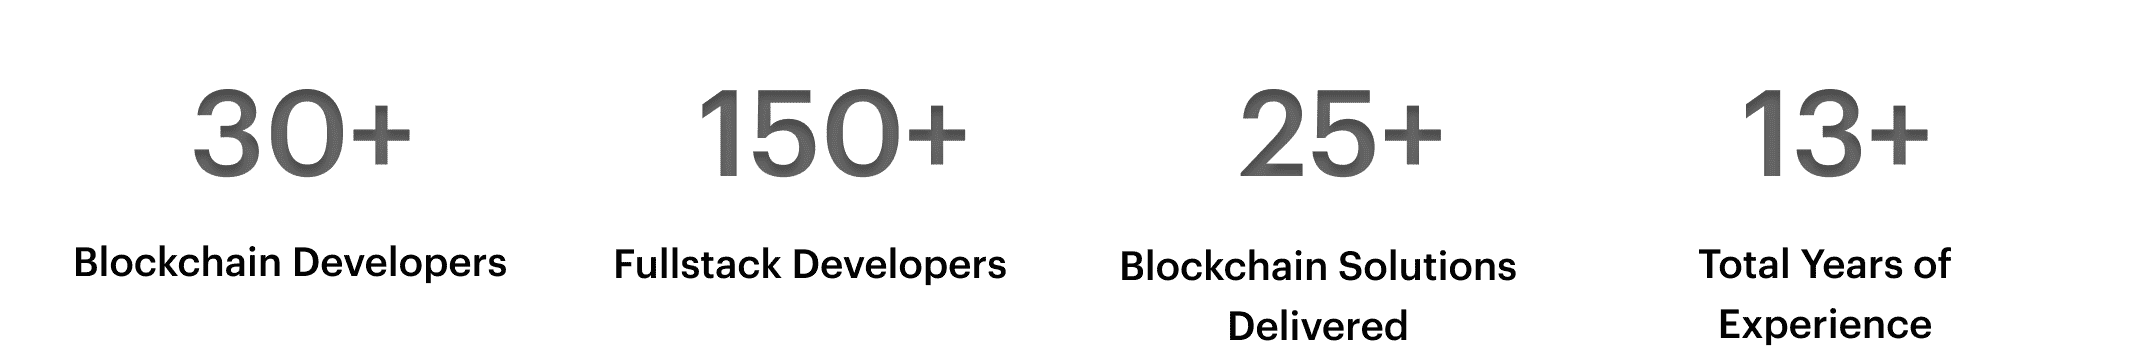 Cardano Blockchain development-numbers